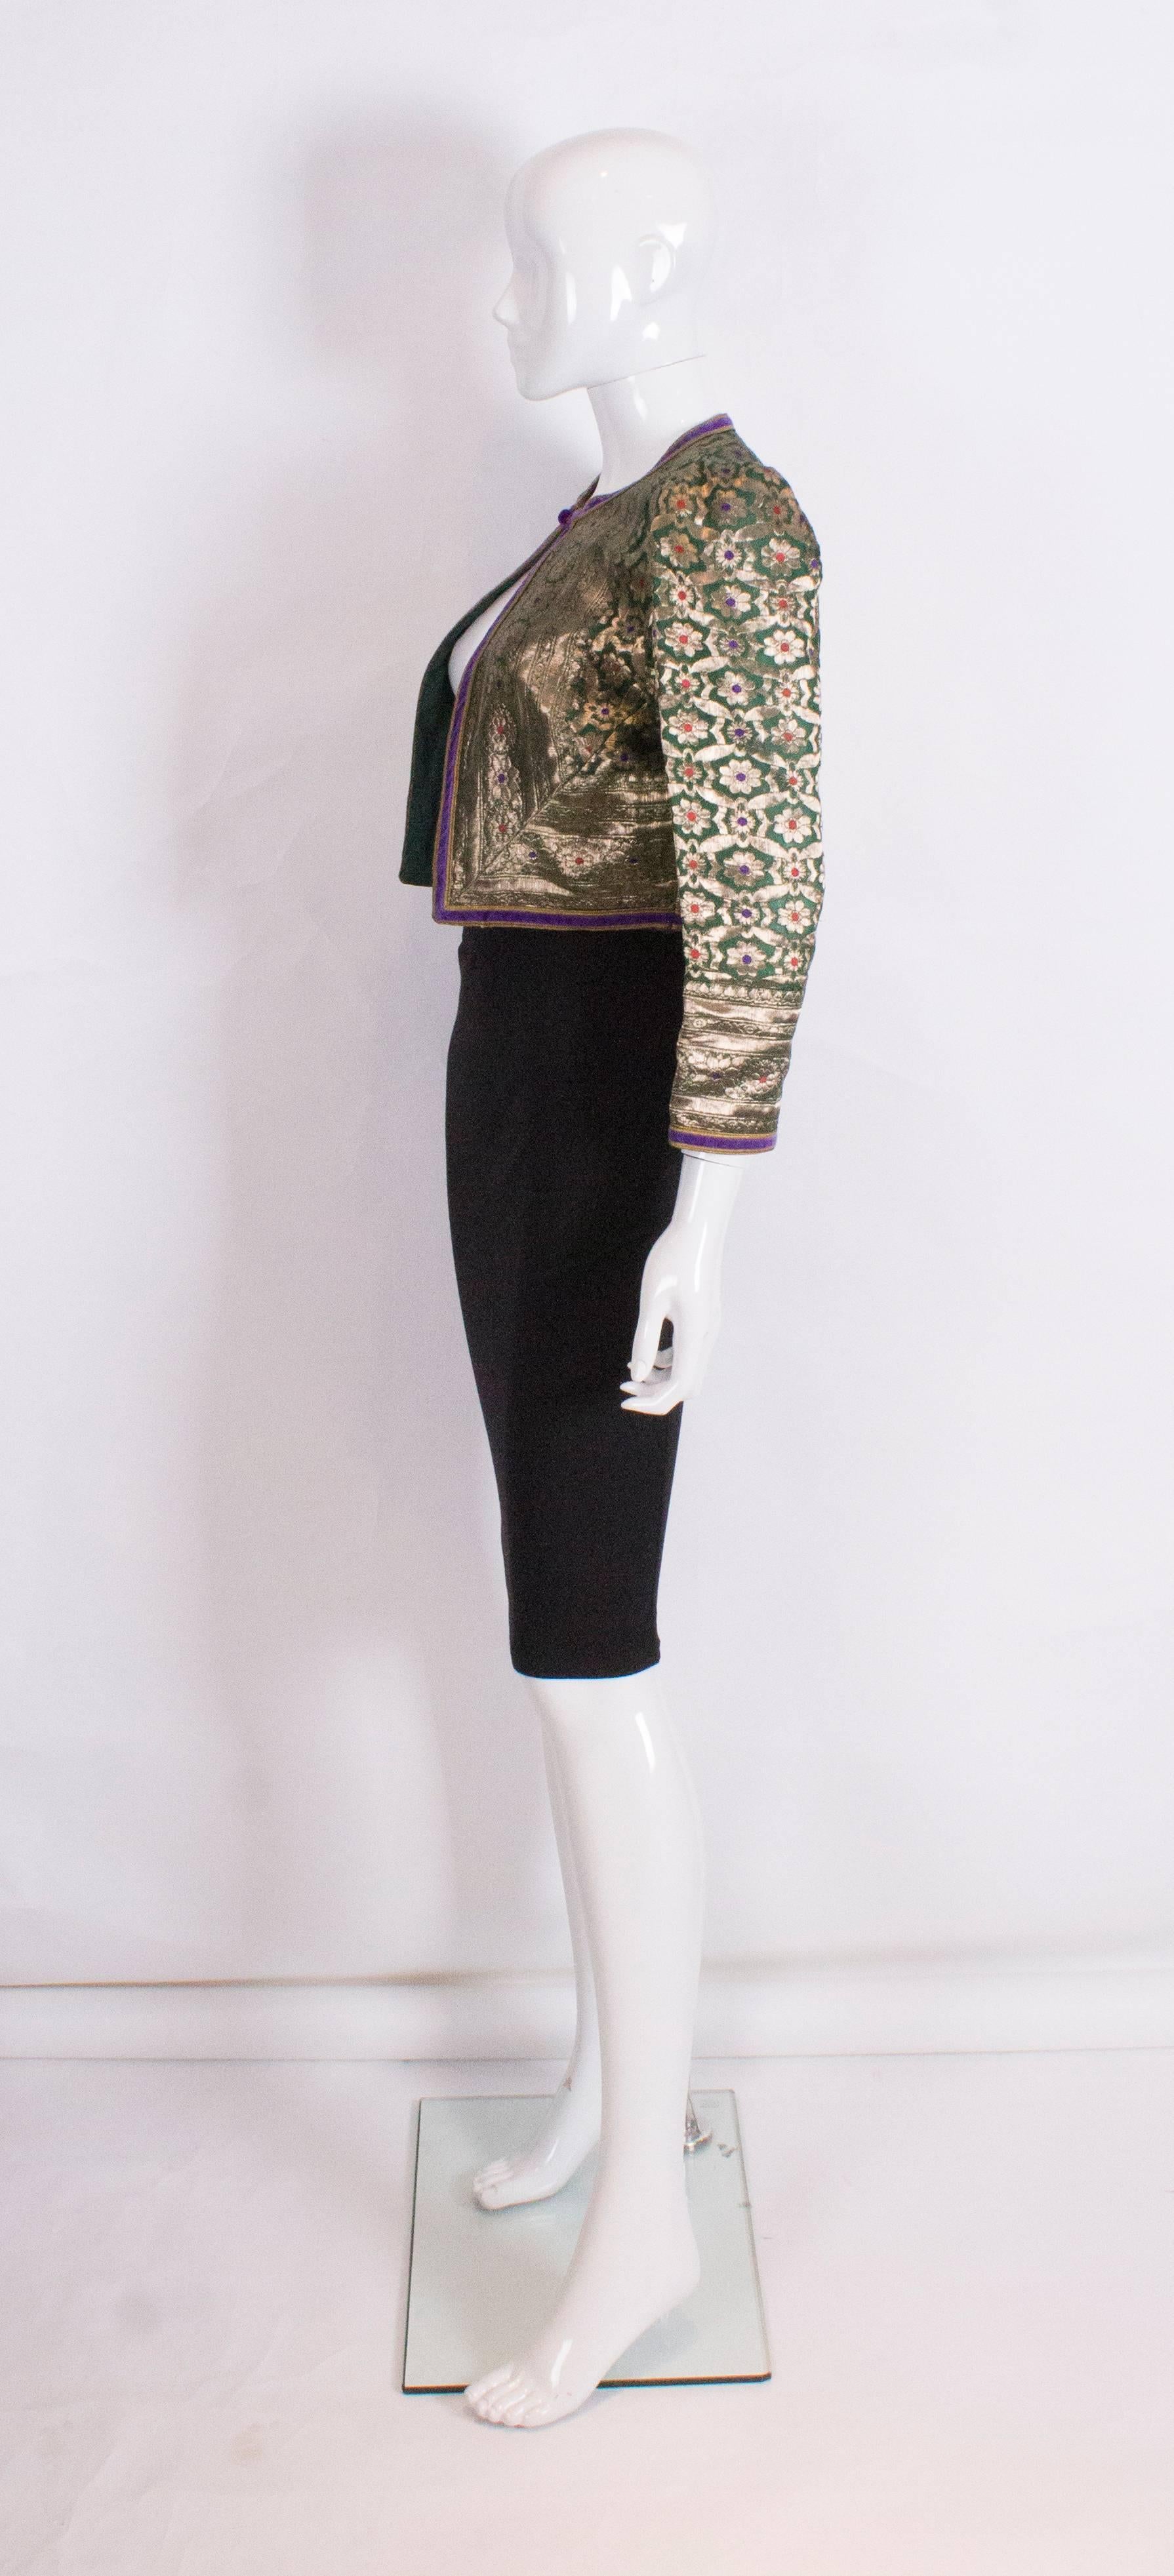 Women's Regamus London Jacket in Gold Thread with Floral Pattern